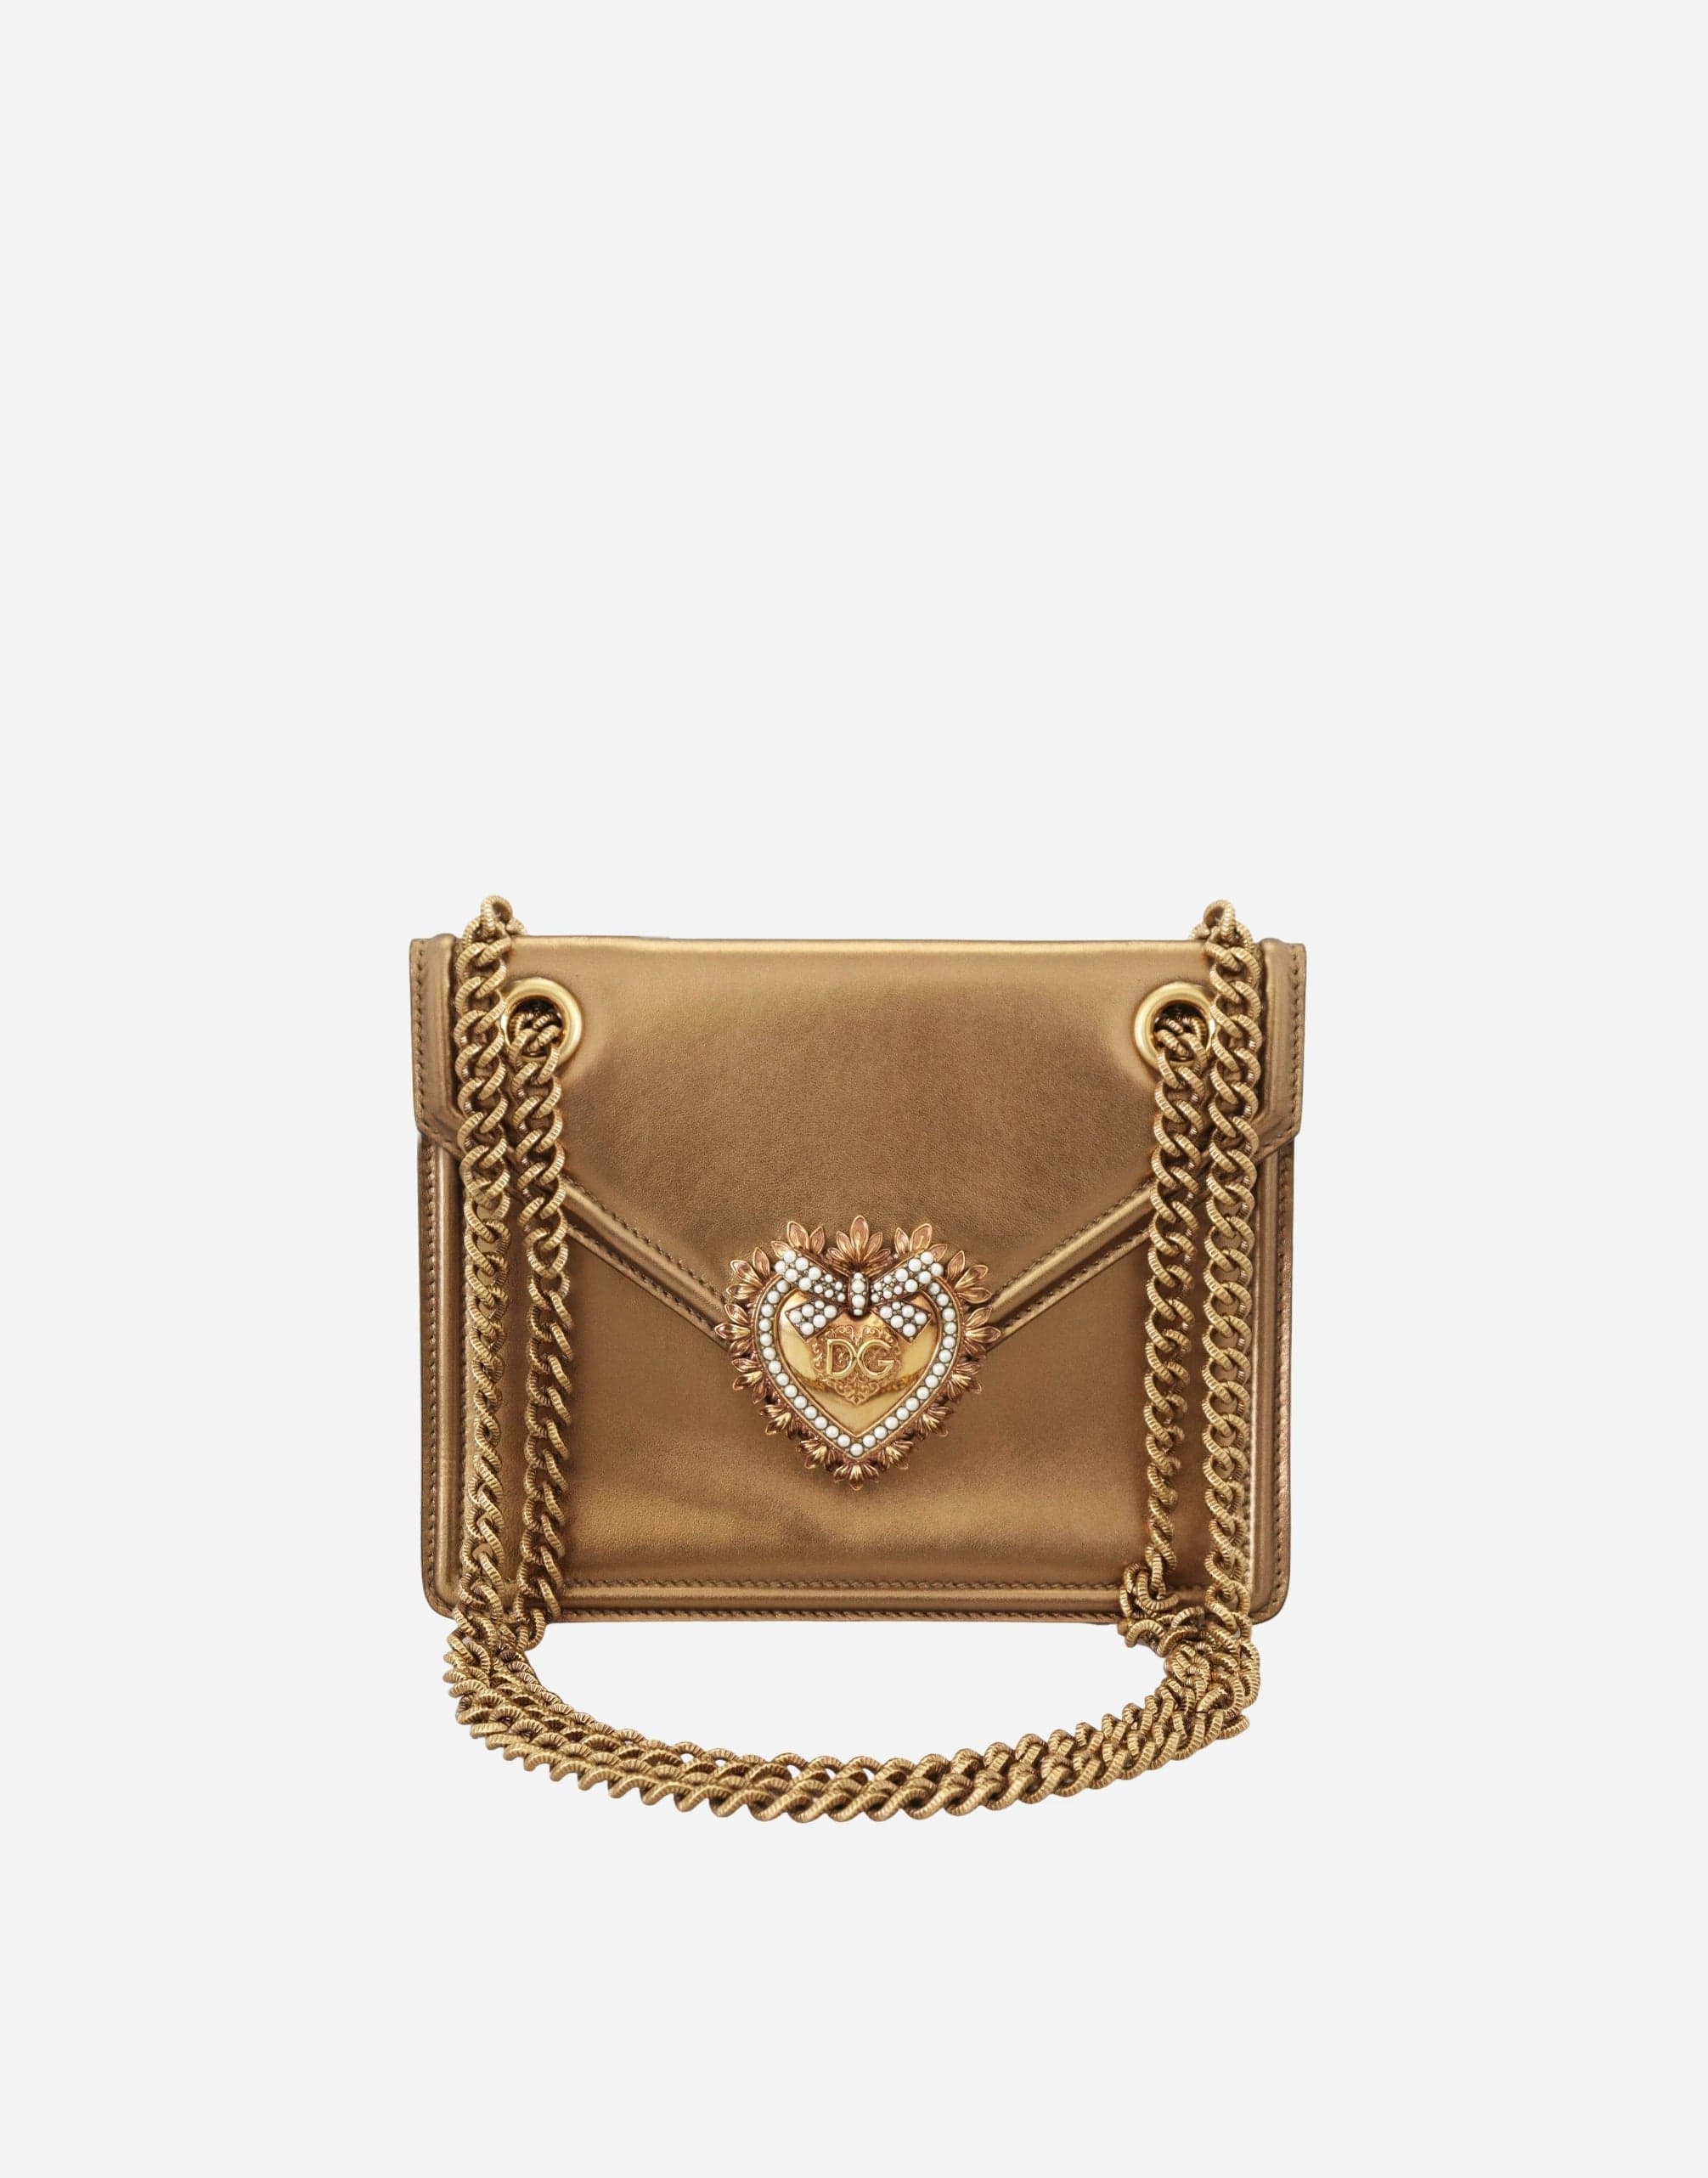 Dolce & Gabbana Devotion Shoulder Bag With Chain